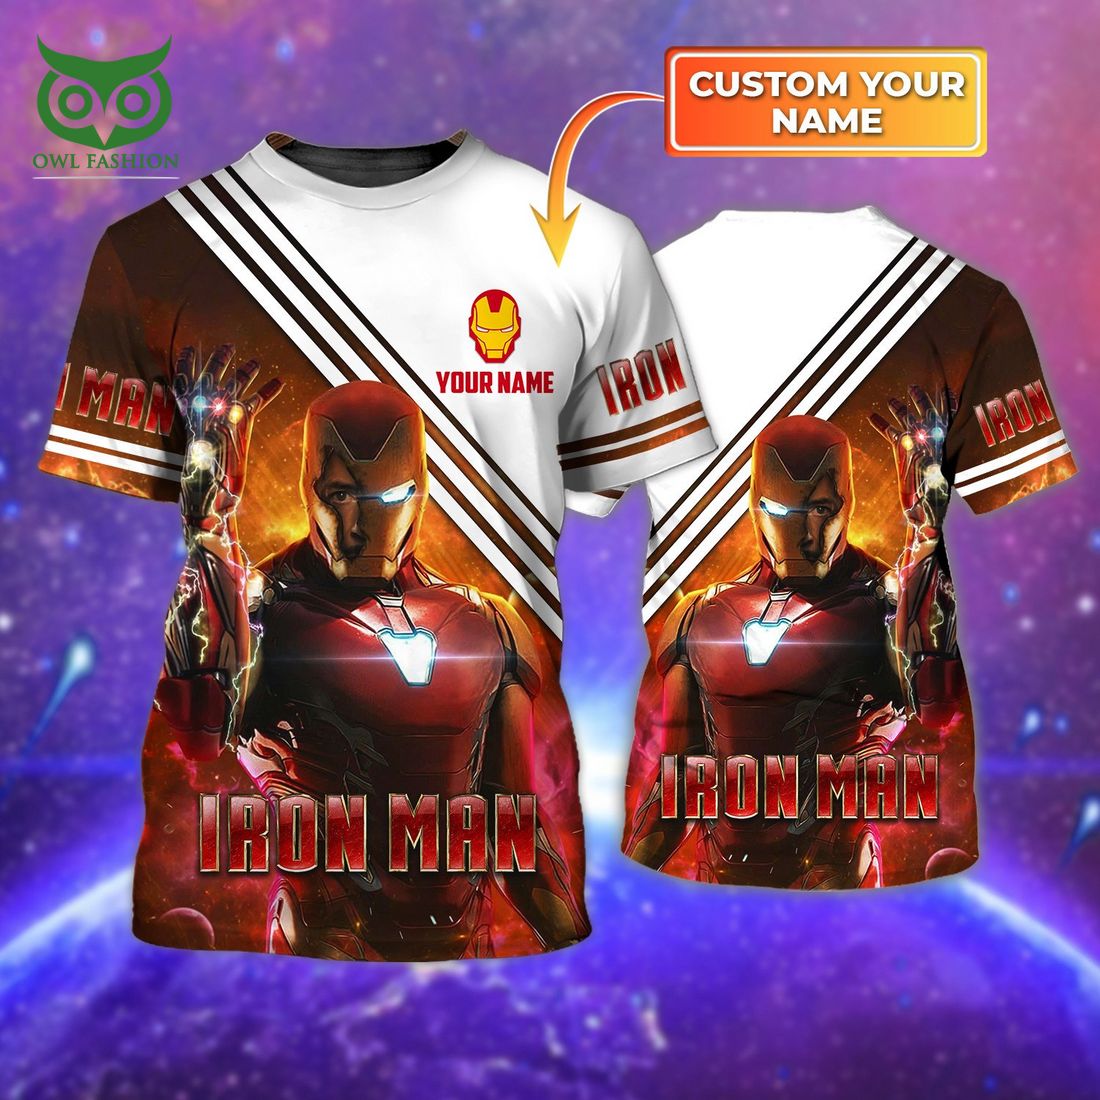 custom name iron man marvel 3d shirt 1 A30fP